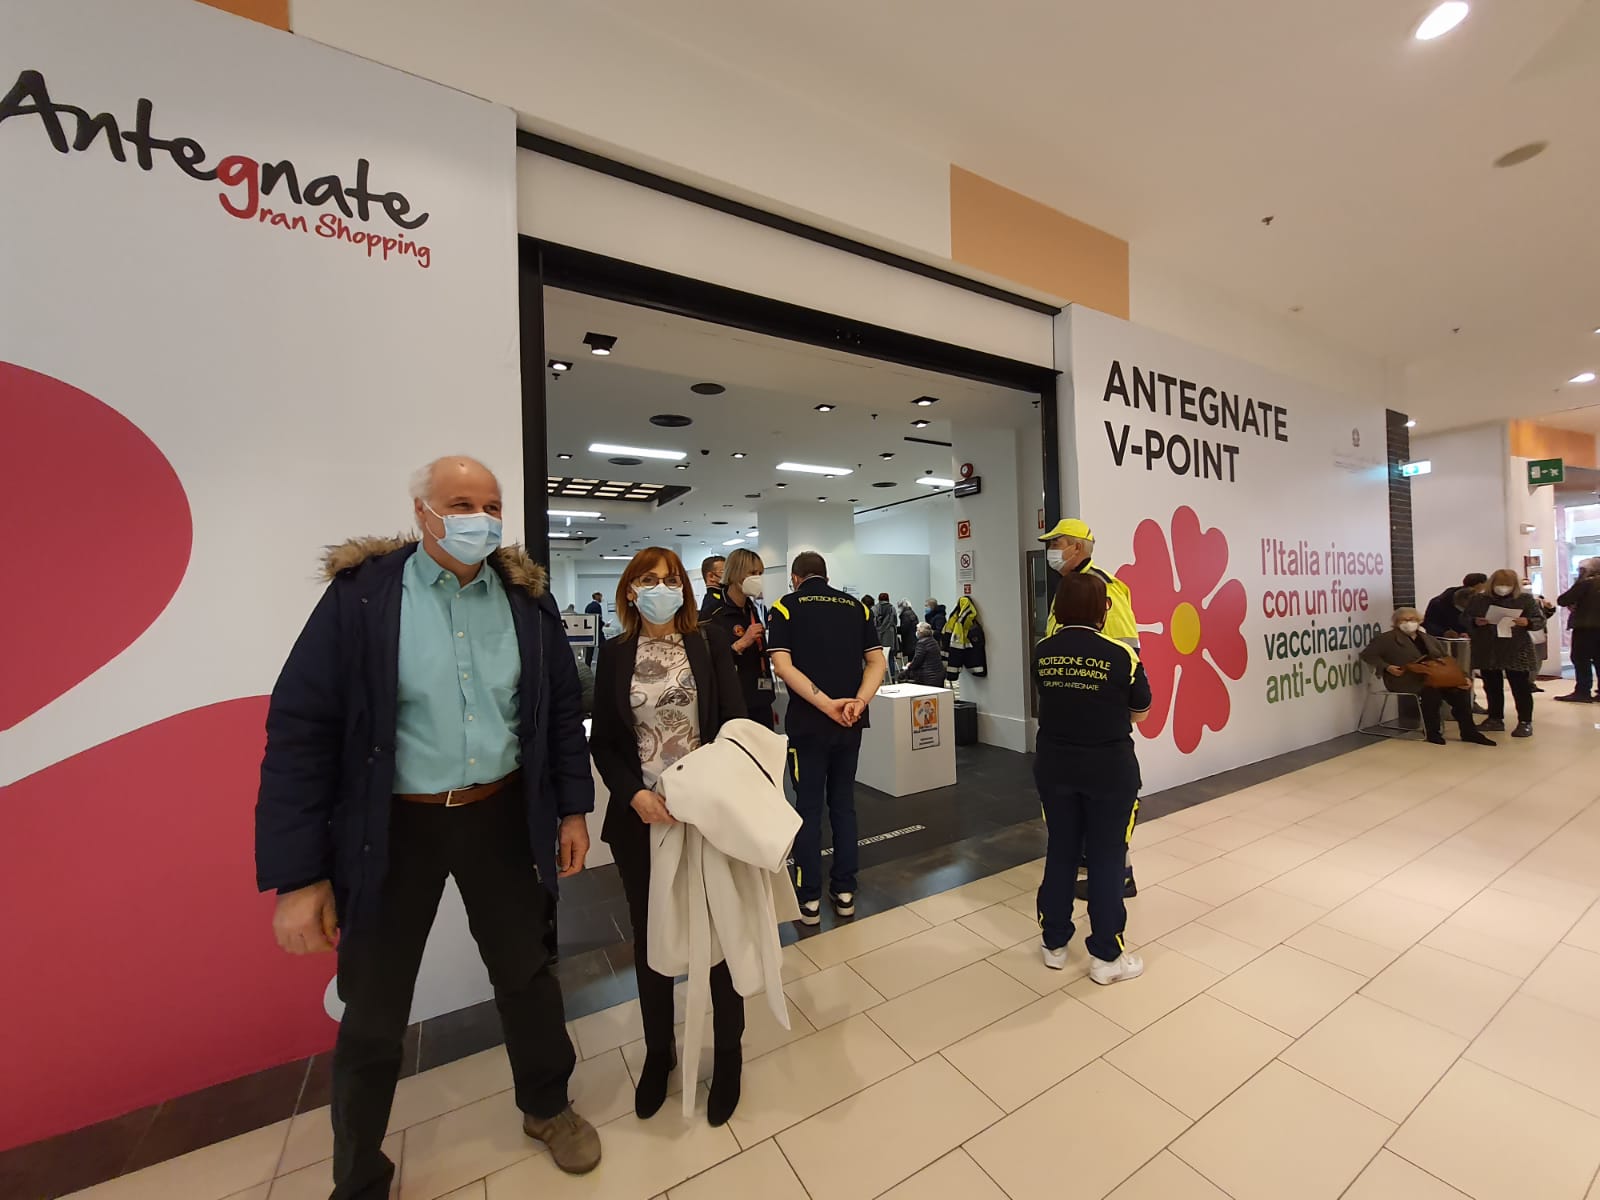 Antegnate Gran Shopping Hub vaccinale anti Covid